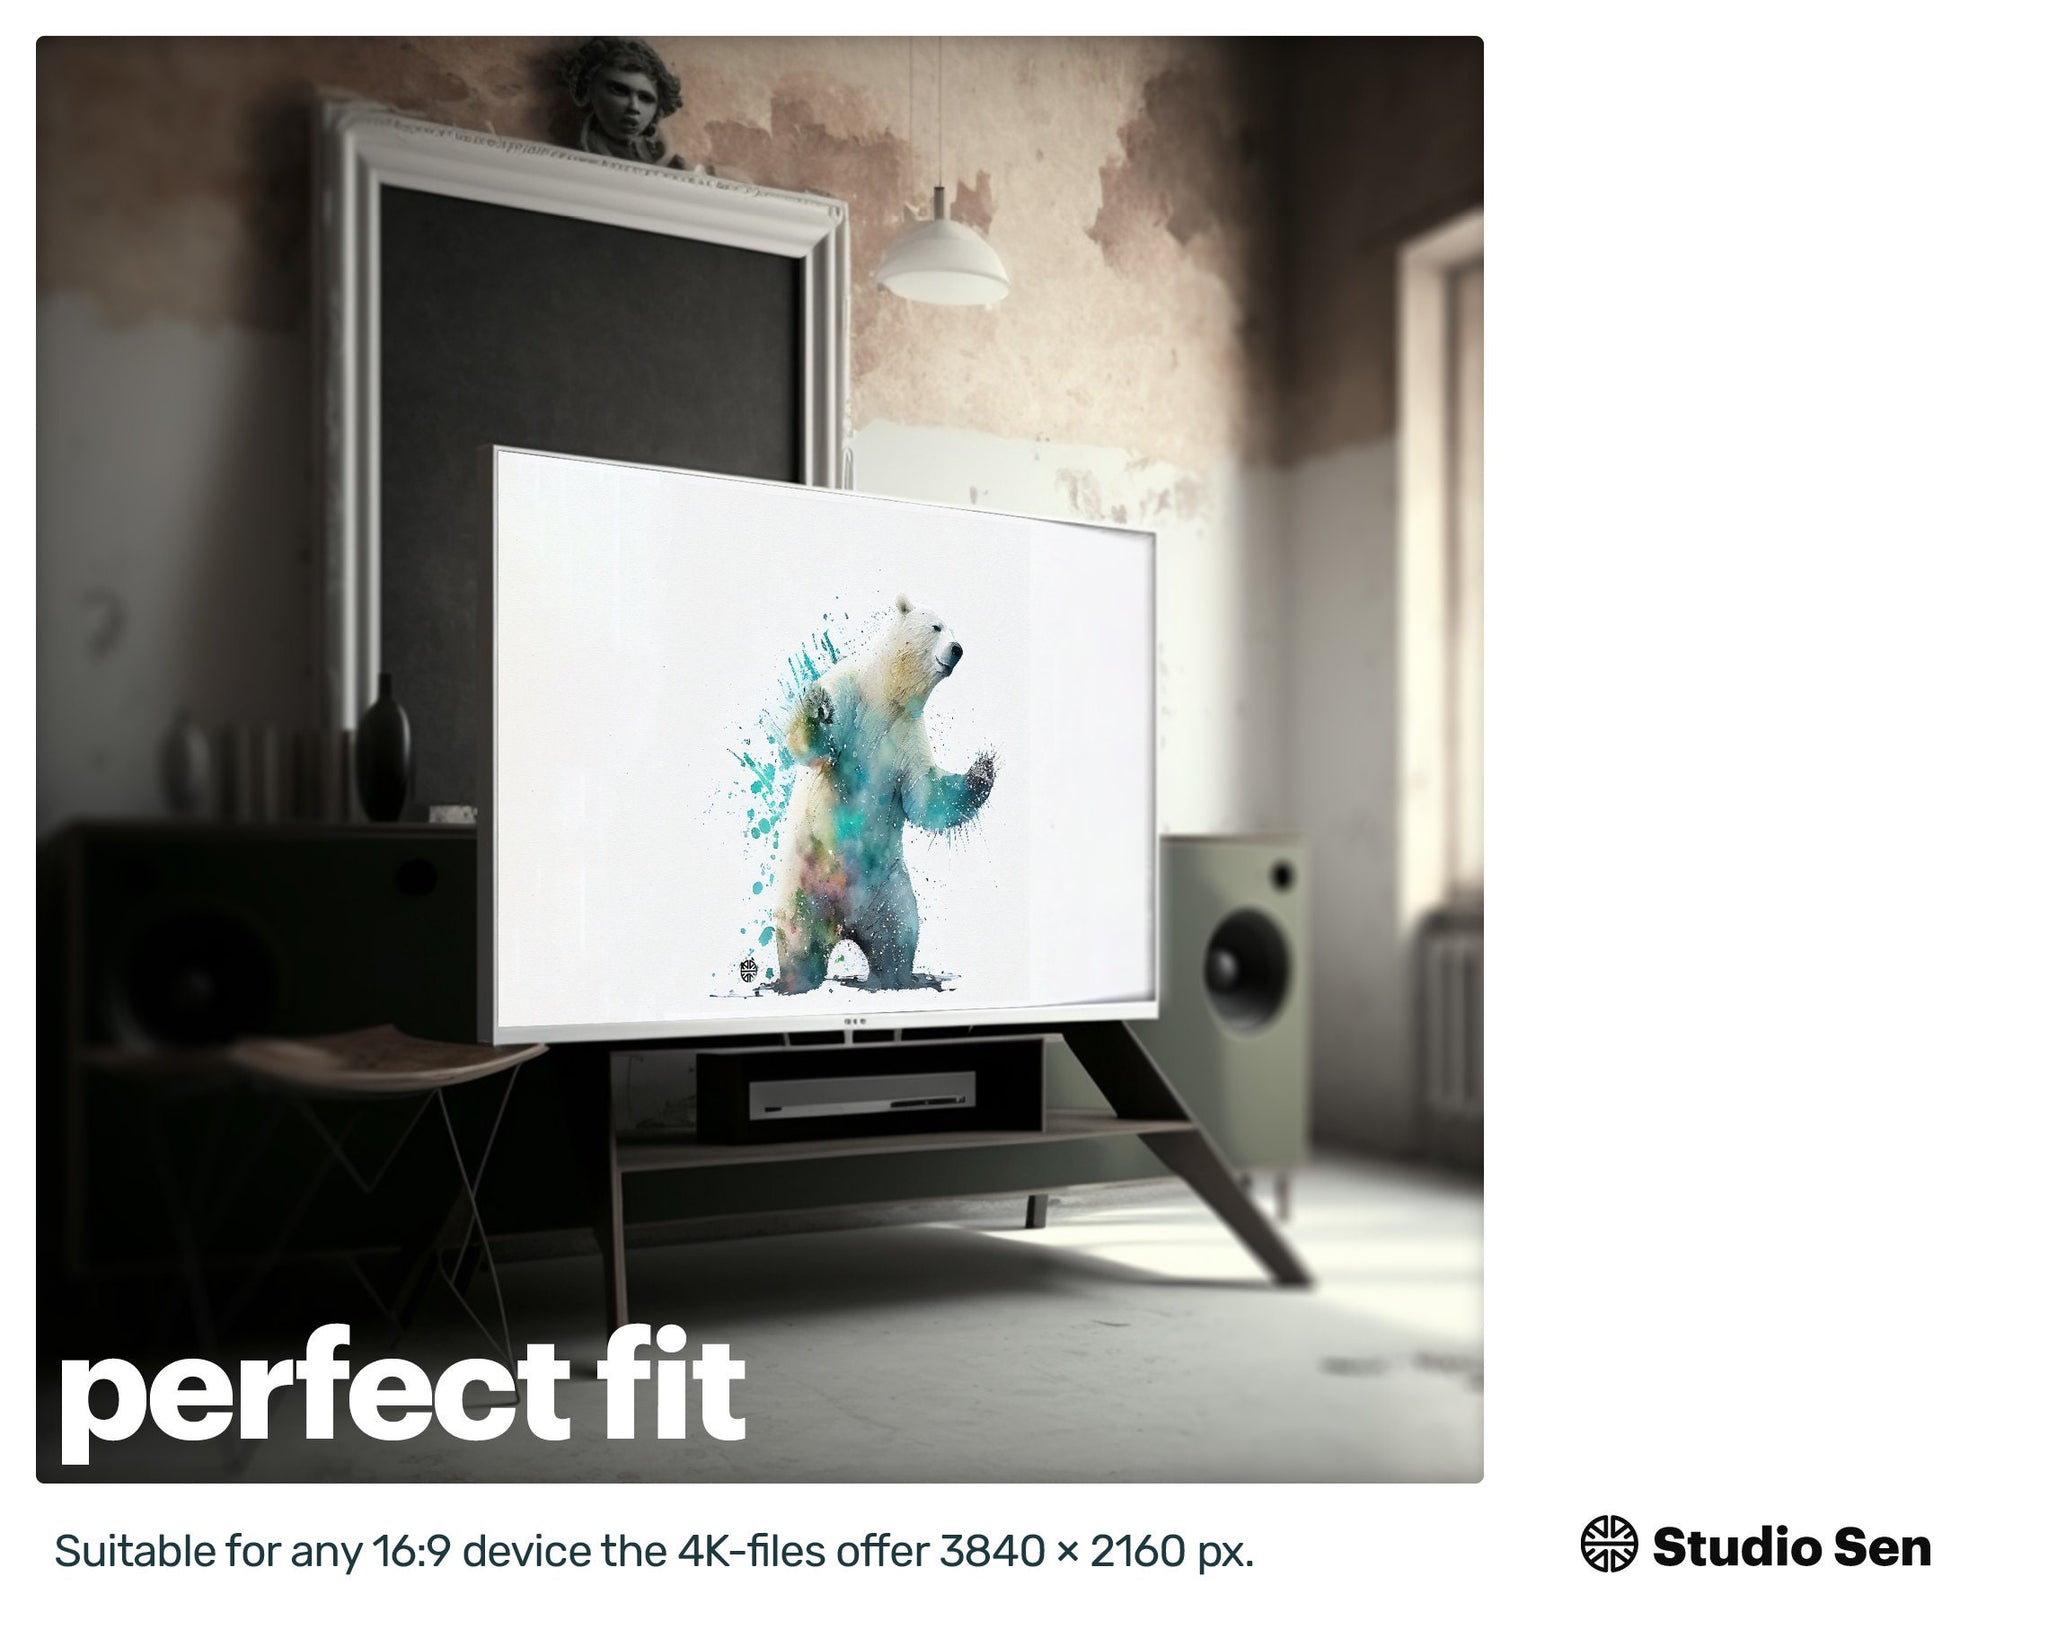 Samsung Art TV, Polar Bear , premium download, drops and splashes, friendly wallpaper, art for kids